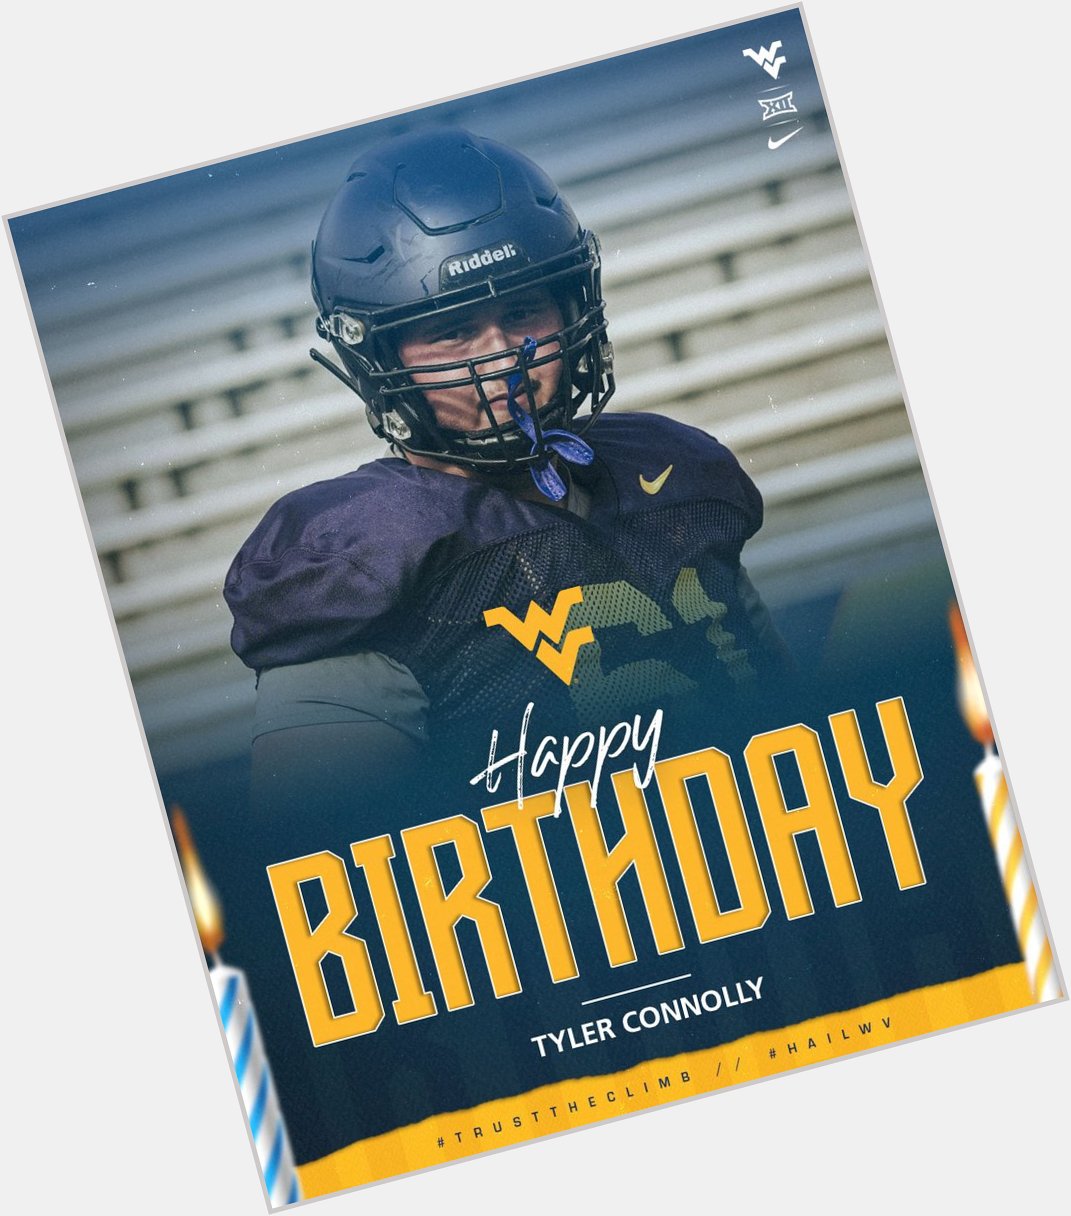 Wishing Tyler Connolly a Happy Birthday! | 